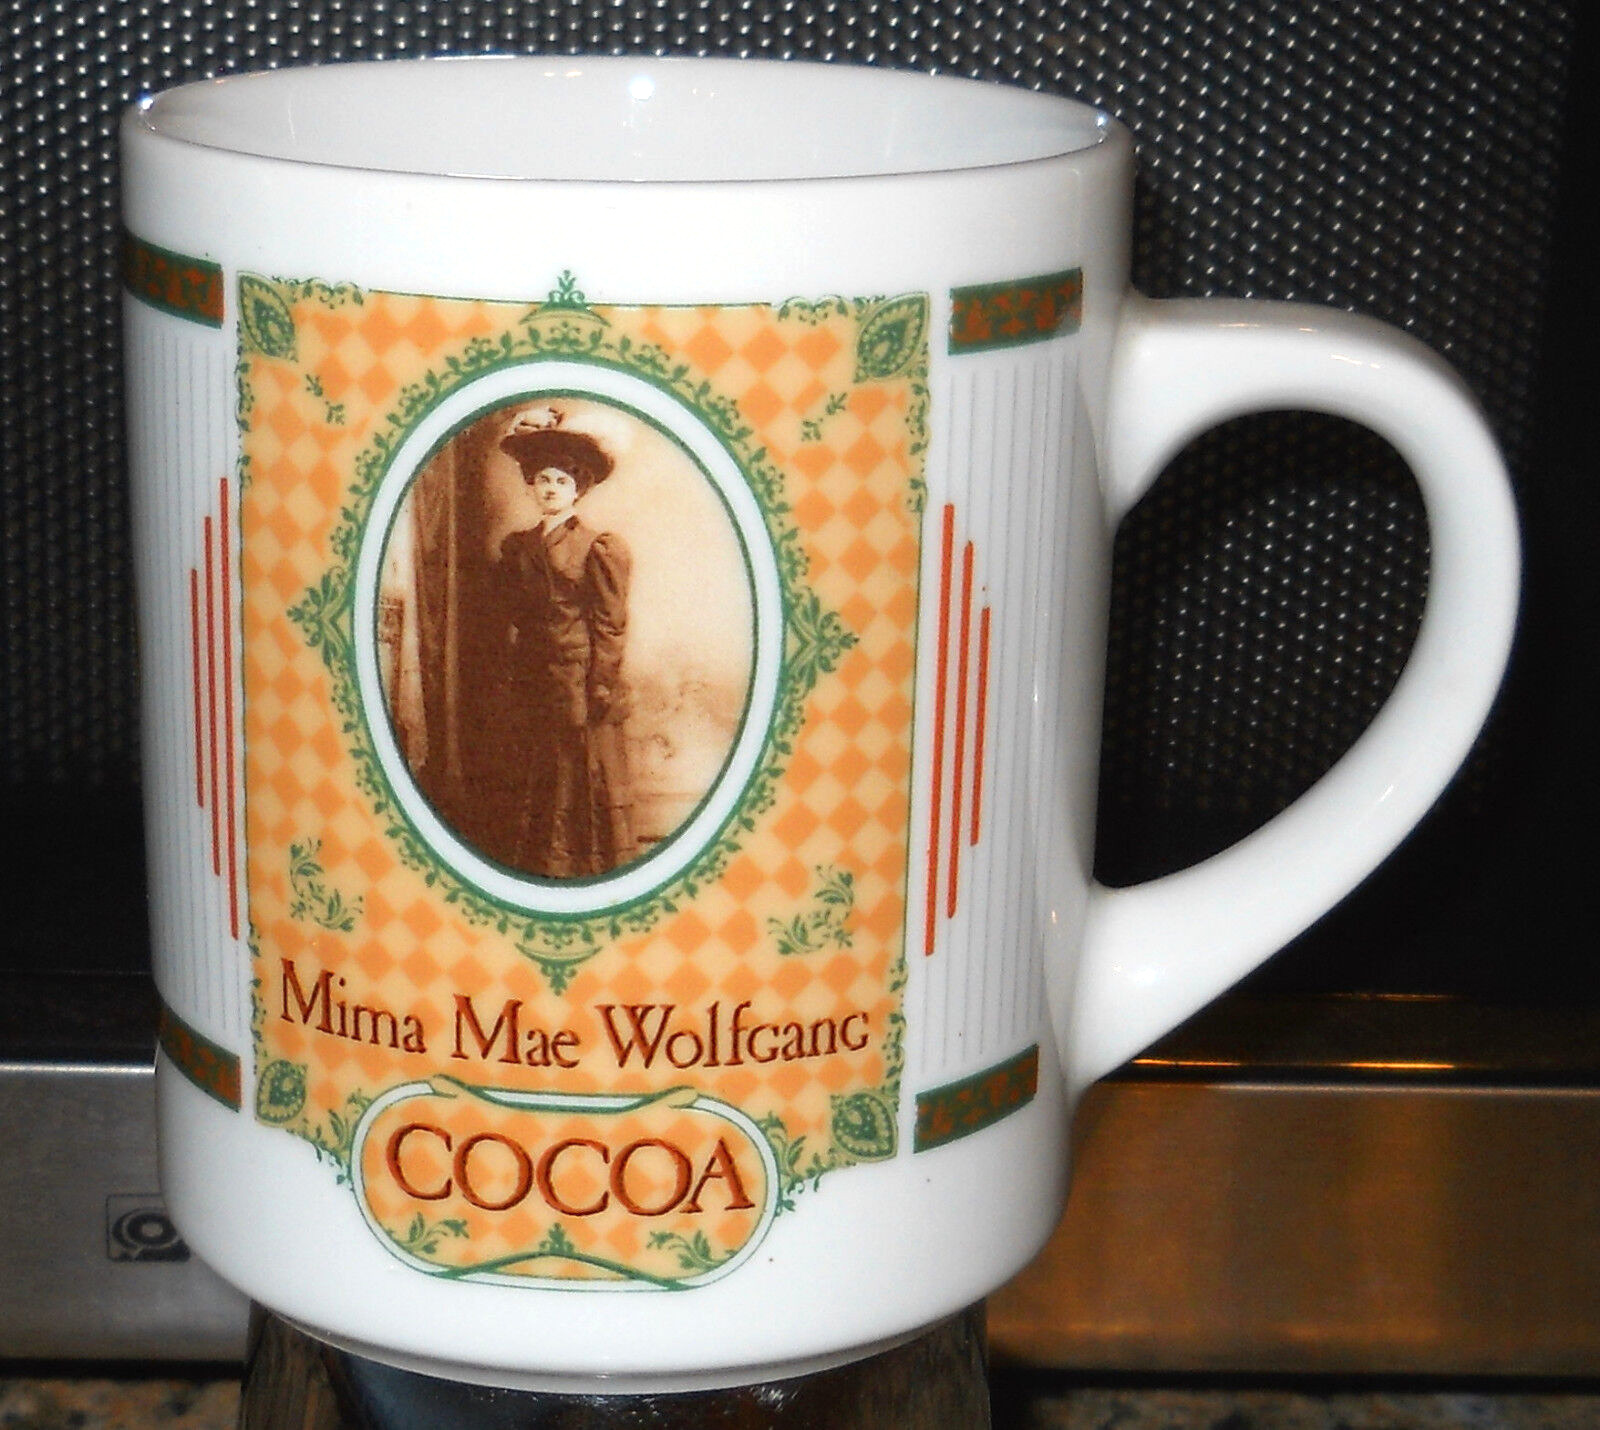 Mima Mae Wolfgang Cocoa Coffee Mug WCC Collectible Ceramic Hot Chocolate Tea Cup